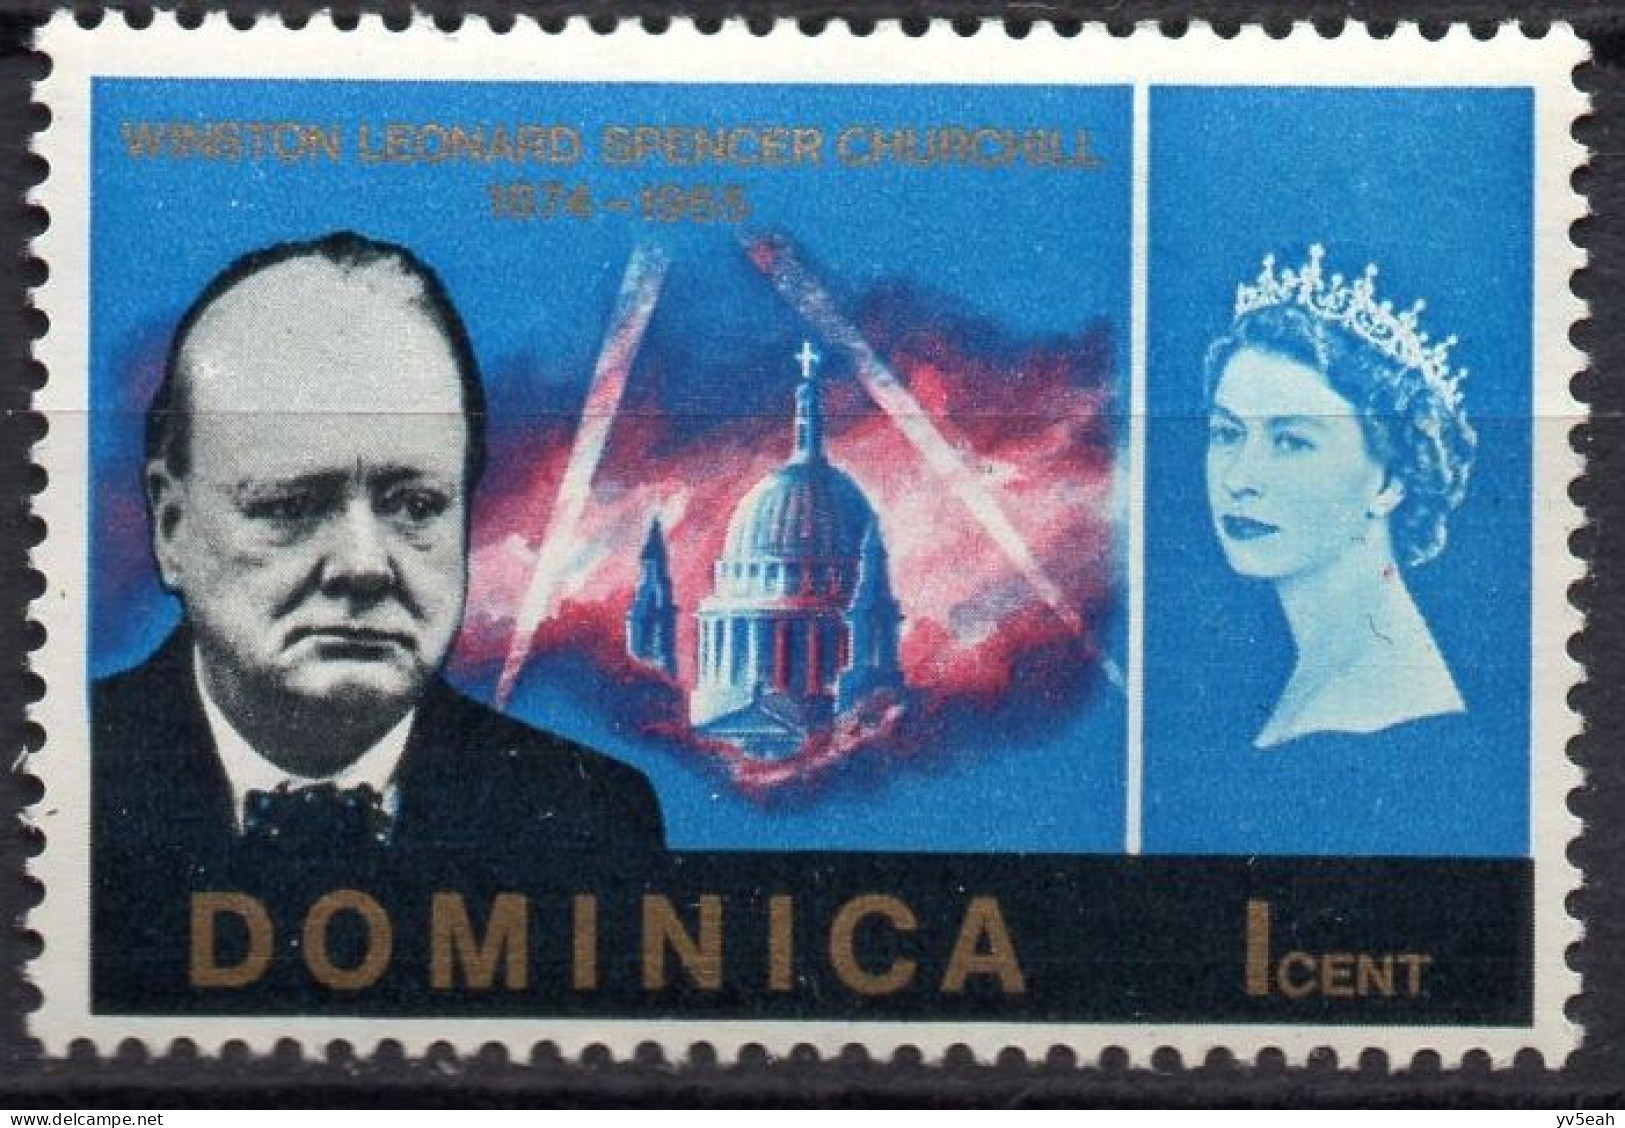 DOMINICA/1965/MNH/SC#189/ SIR WINSTON CHURCHILL MEMORIAL ISSUE/ 1c BRIGHT BLUE - Dominica (...-1978)